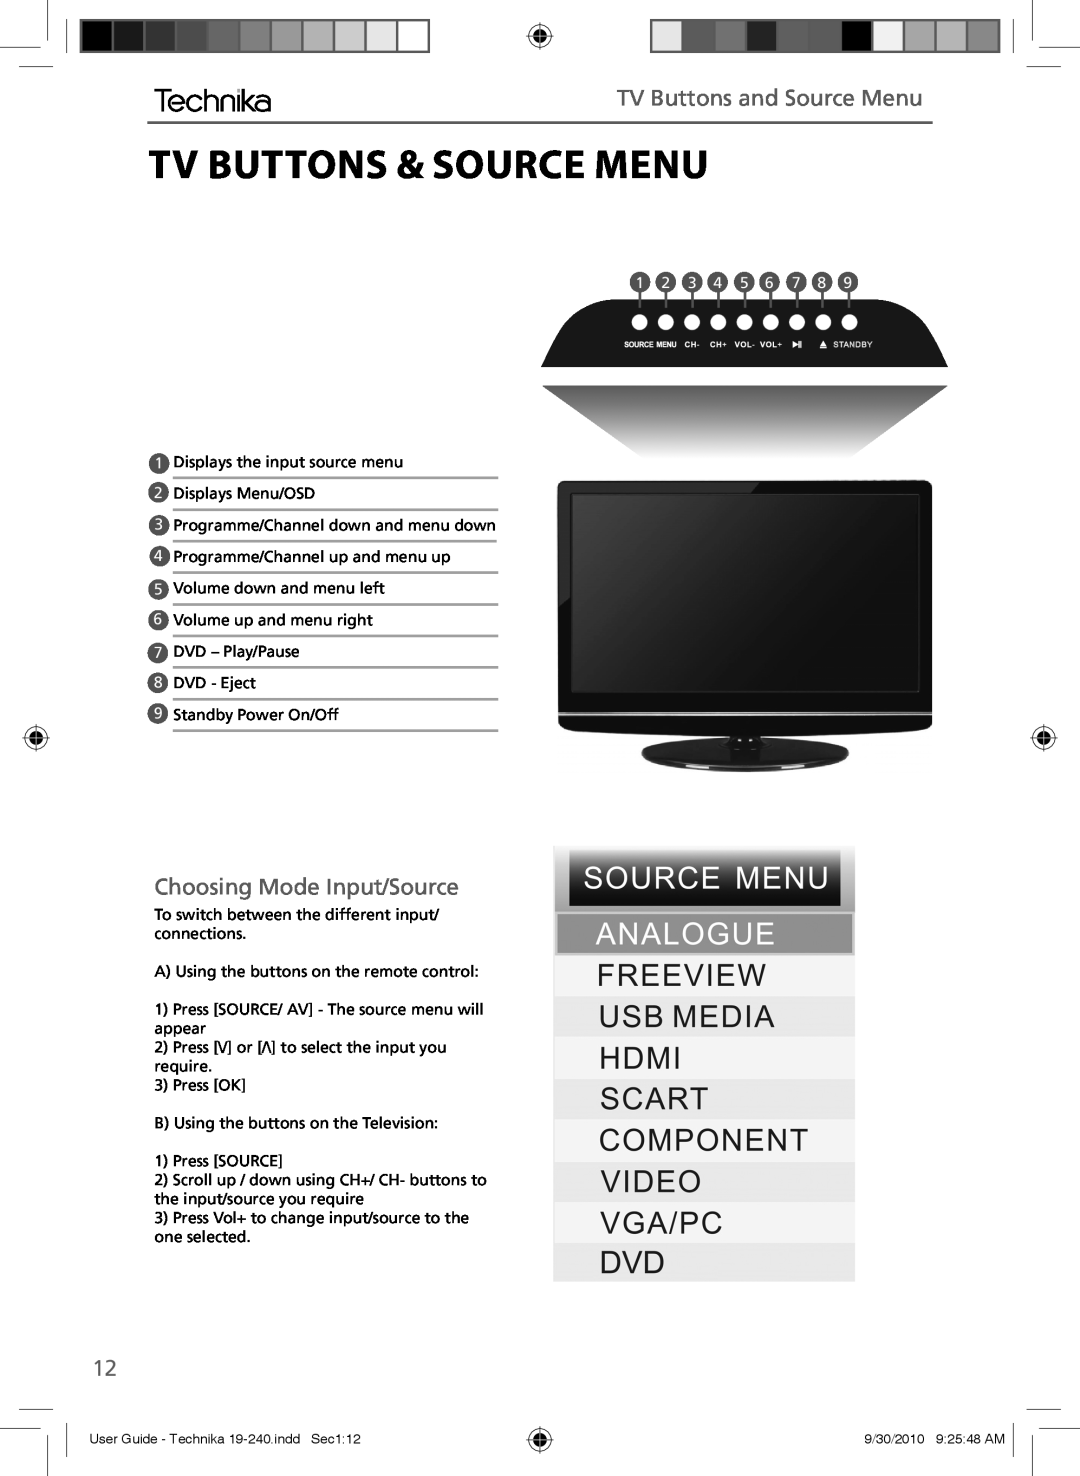 Technika LCD 19-240 Tv Buttons & Source Menu, TV Buttons and Source Menu, Choosing Mode Input/Source, 1 2 3 4 5 6 7 8 